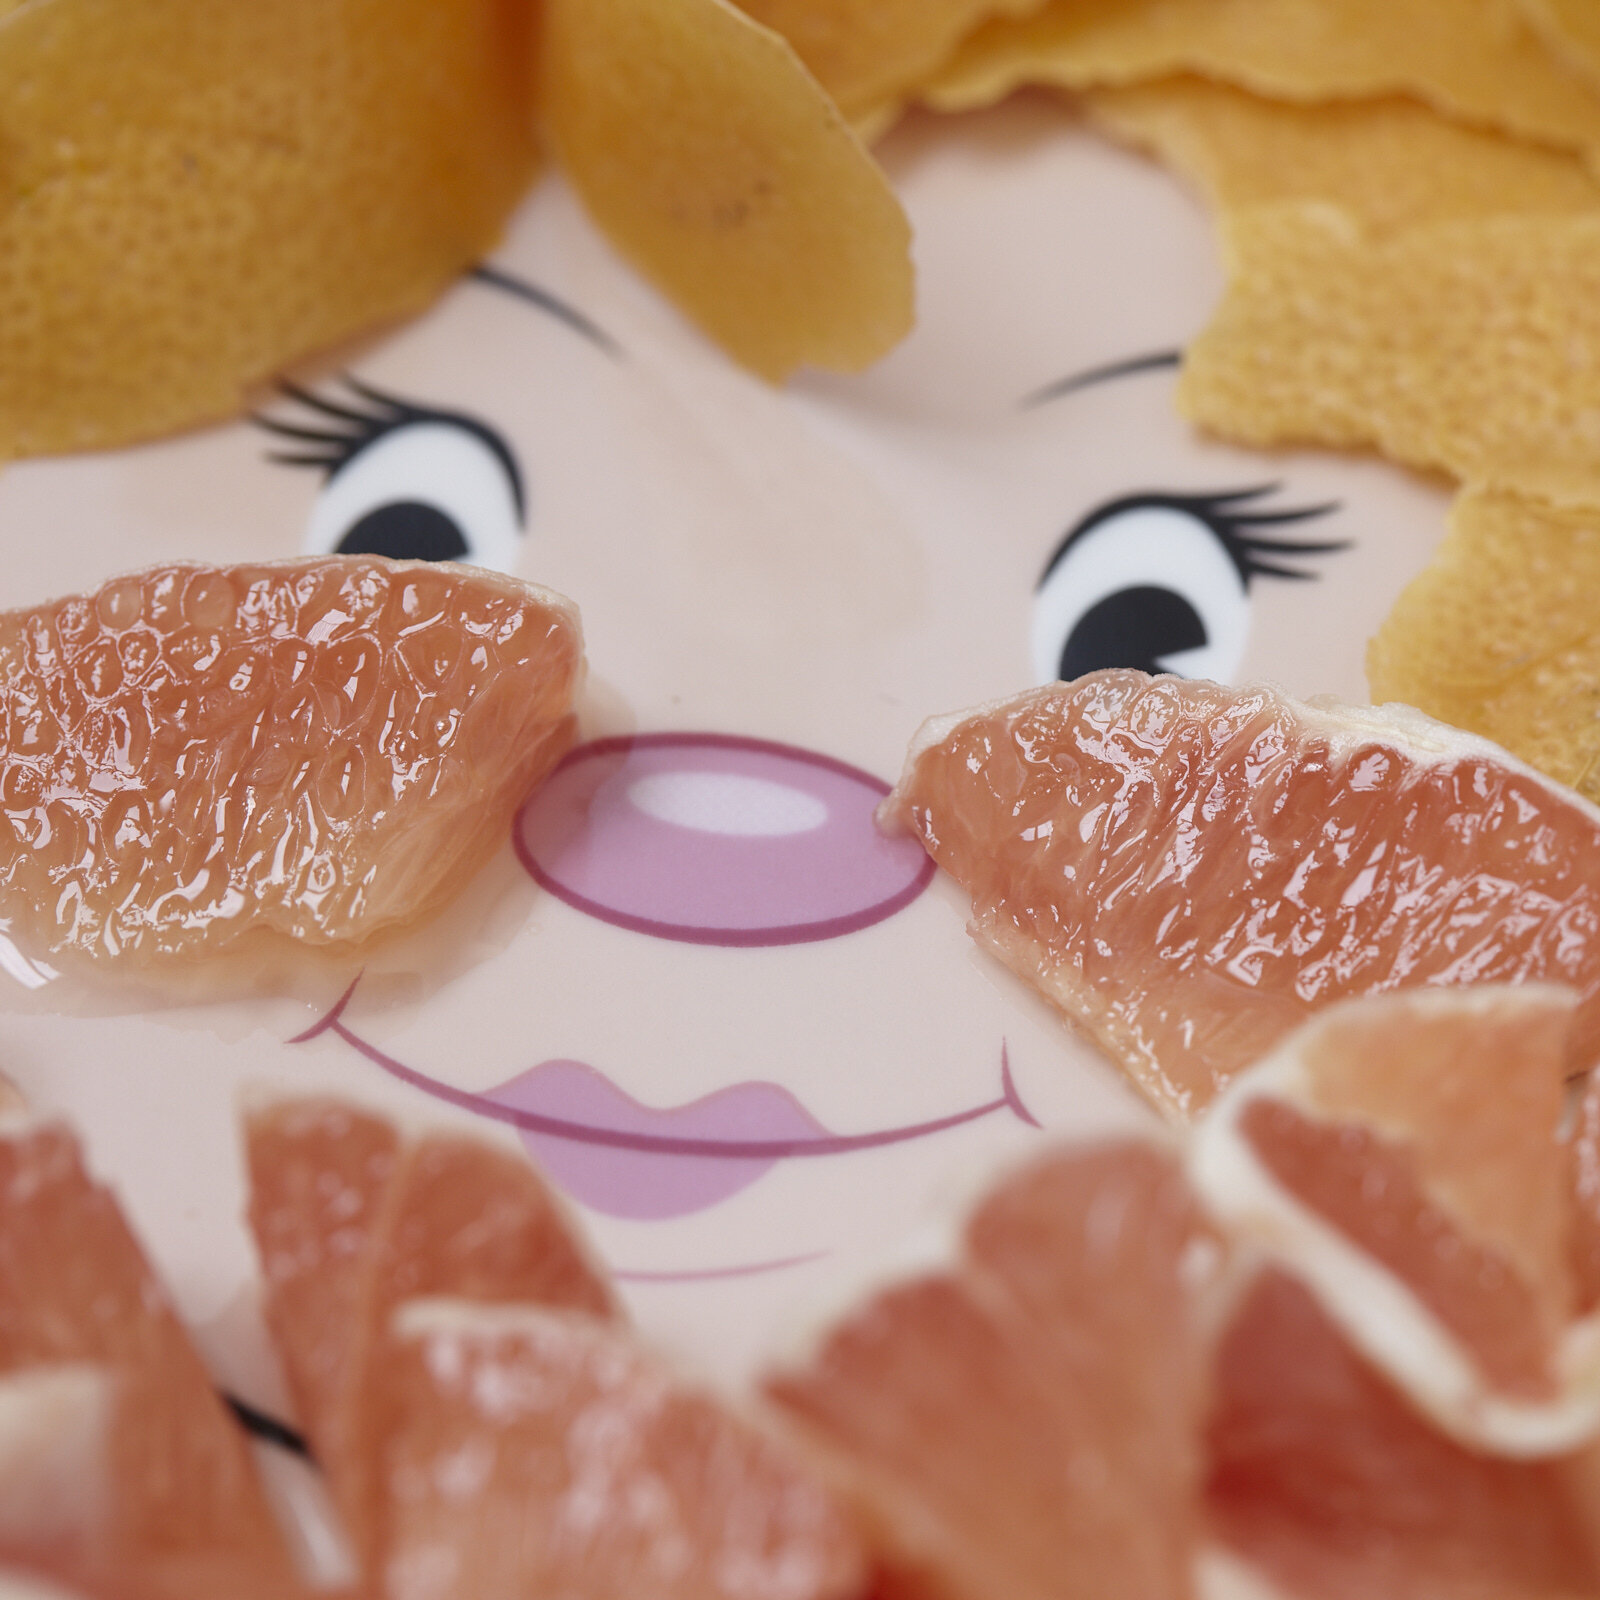 Grapefruit food face detail